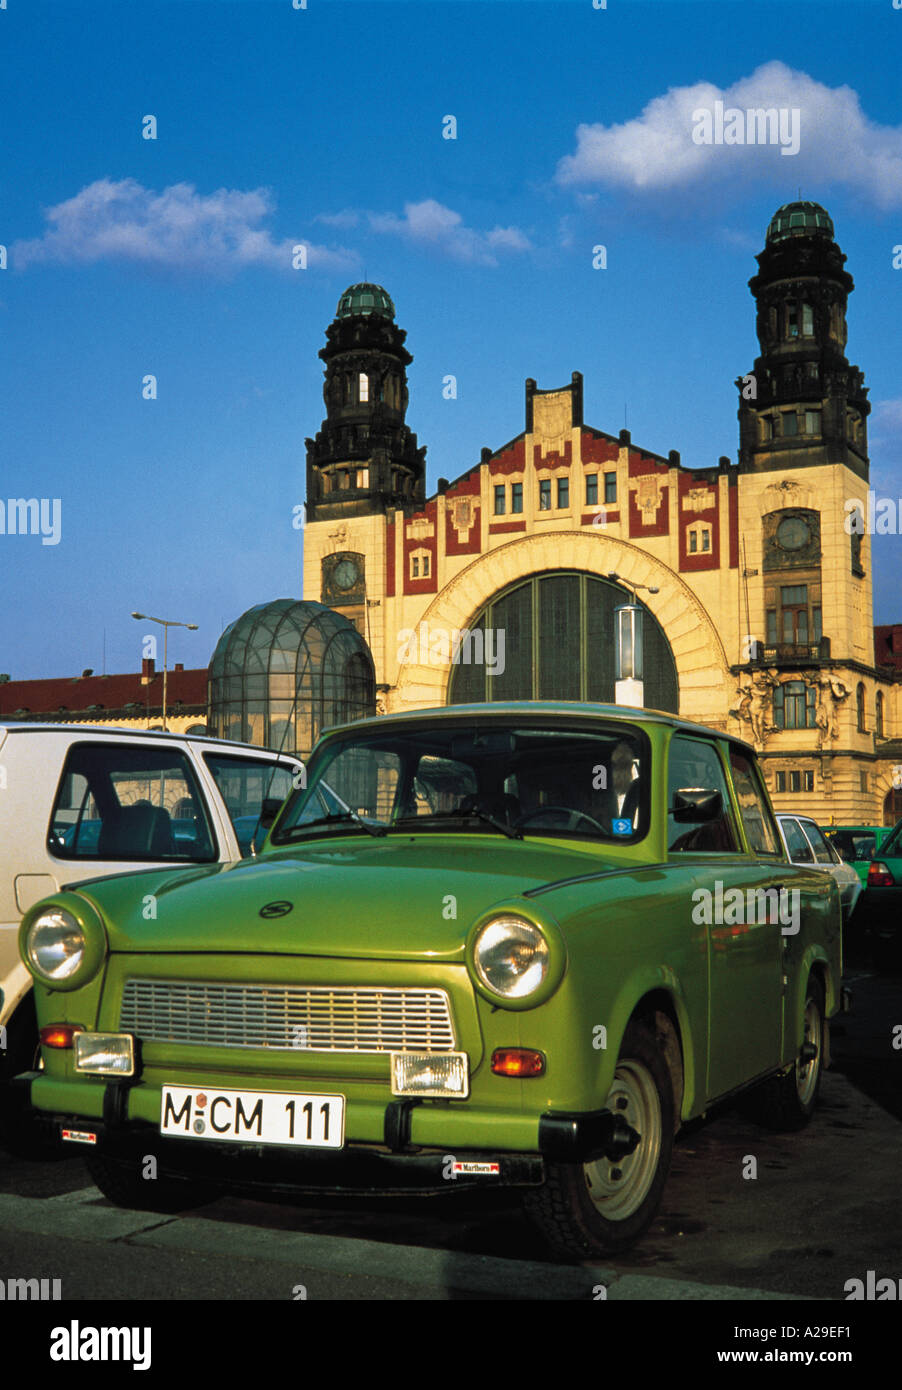 Central station and old trabant car Prague Czech Republic S Grandadam Stock Photo